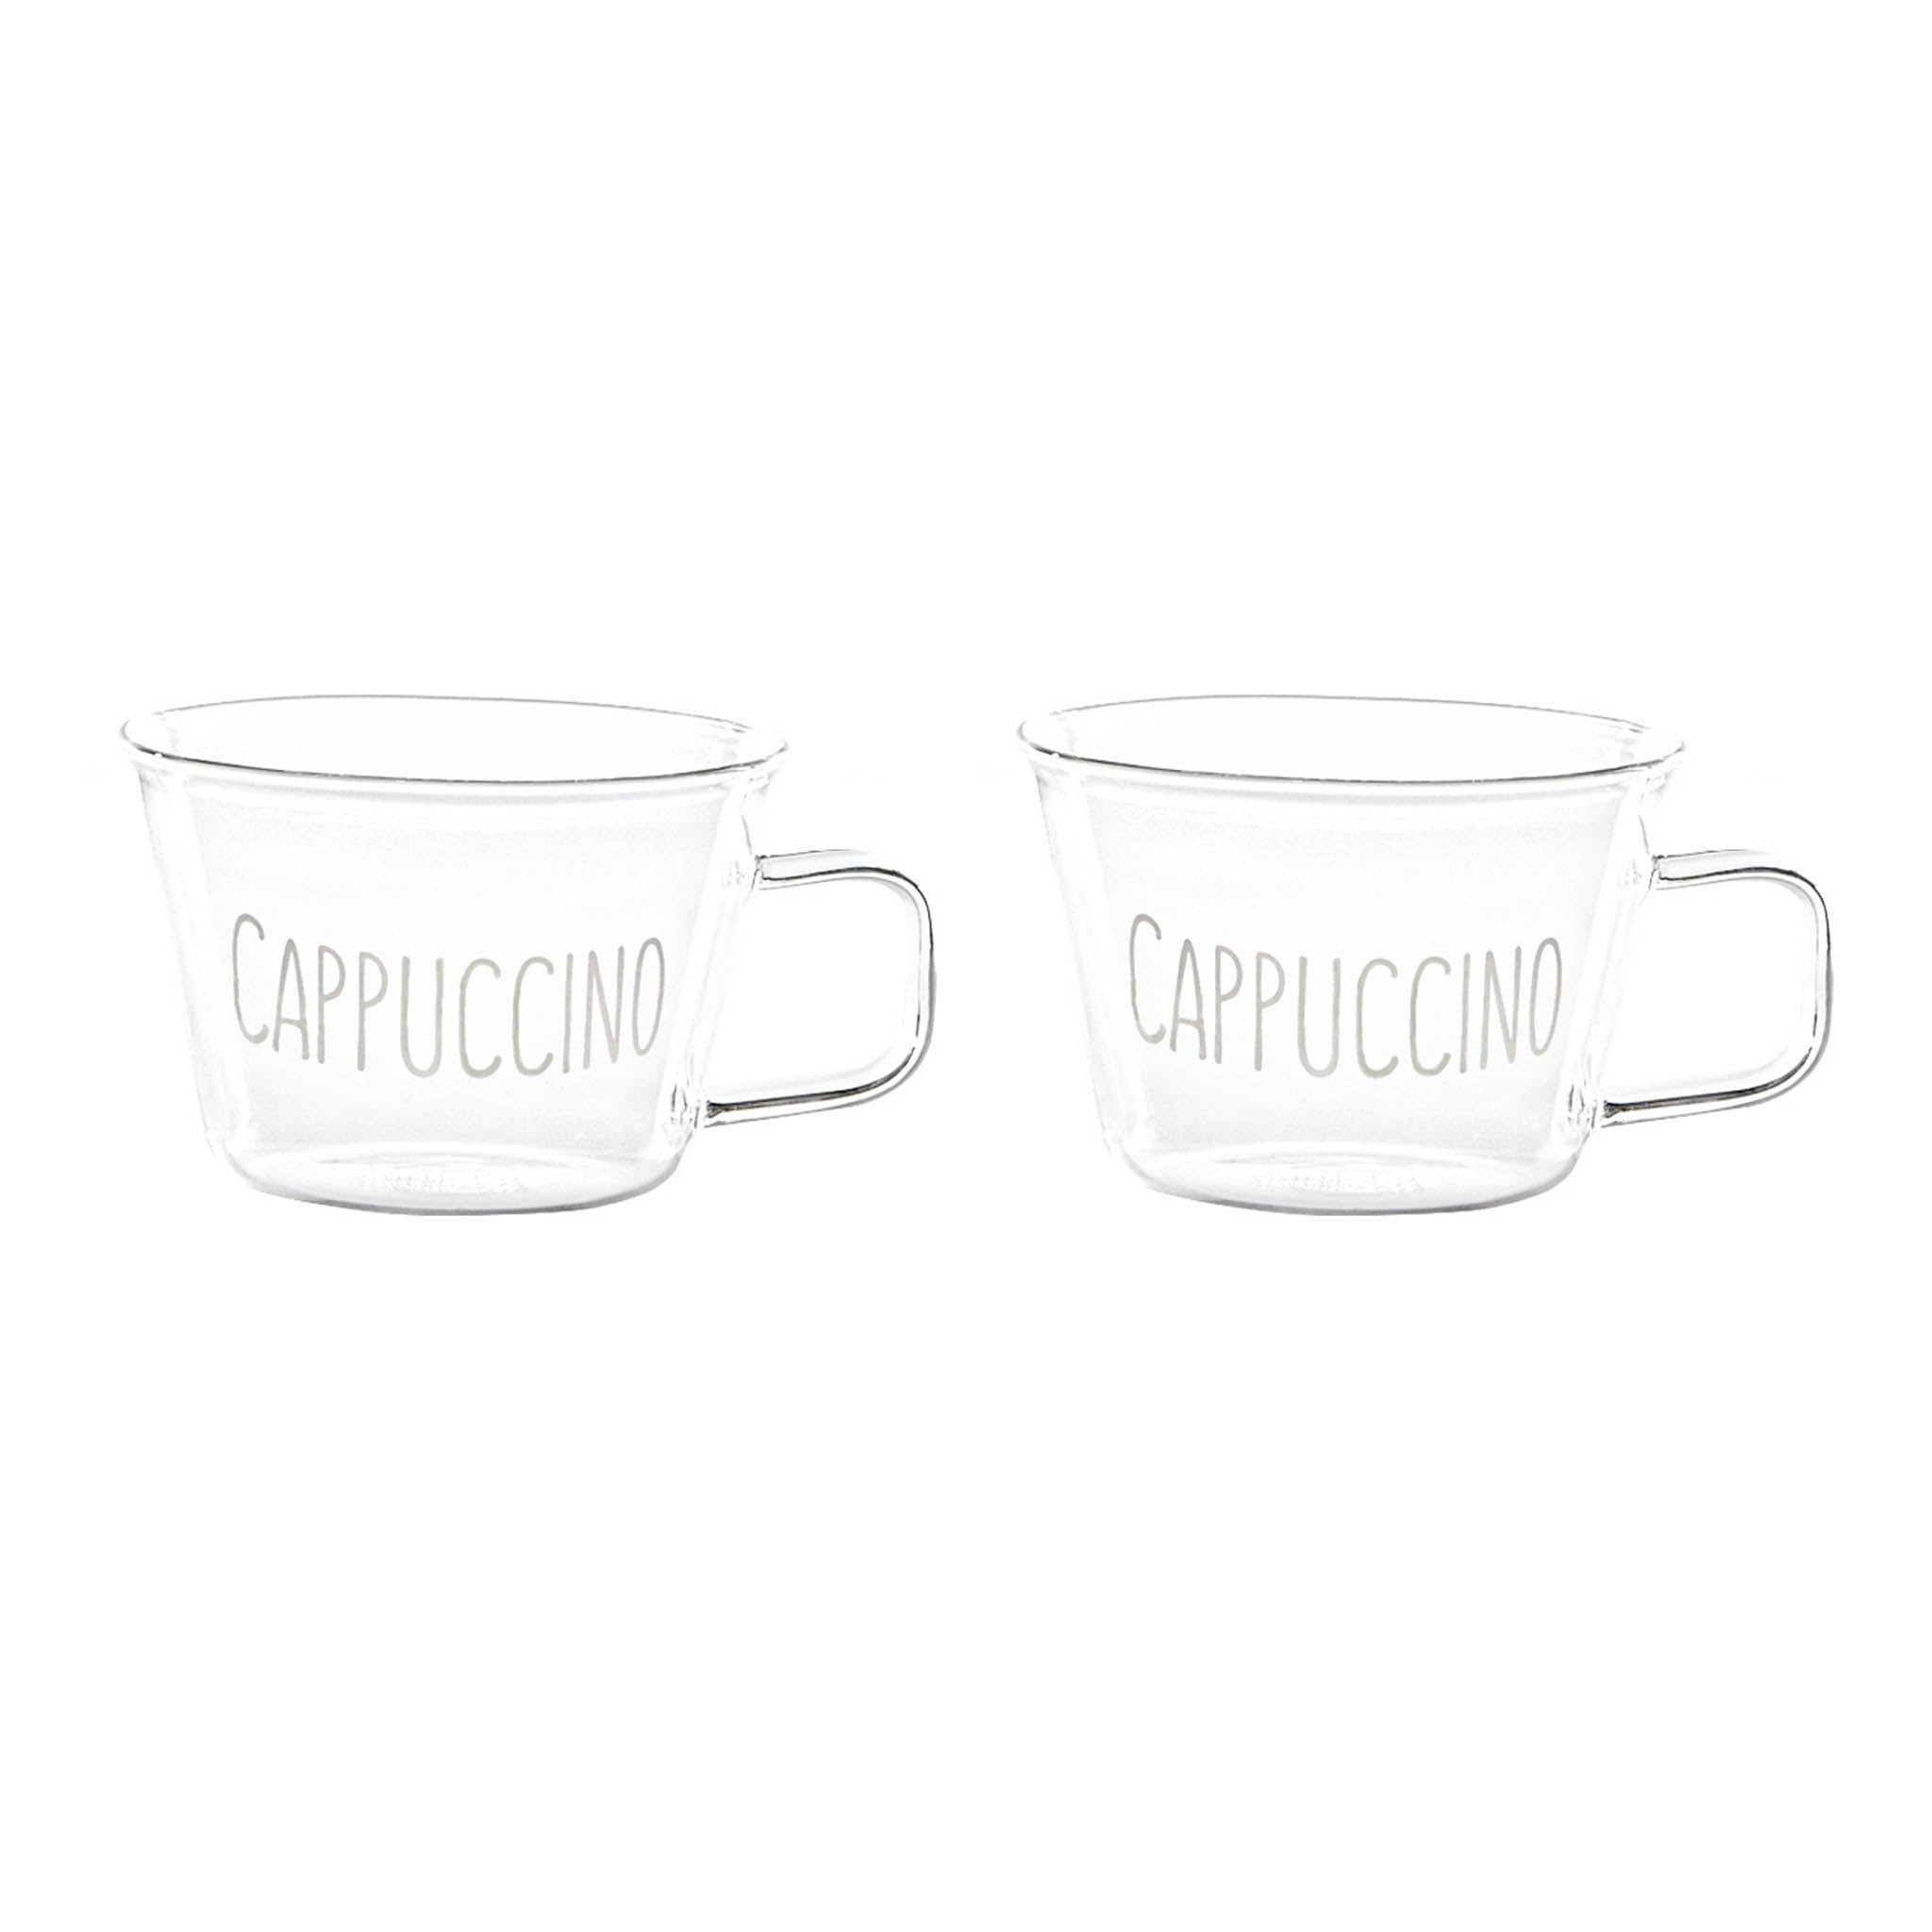 Cappuccinotasse "Cappuccino" 2er- Set